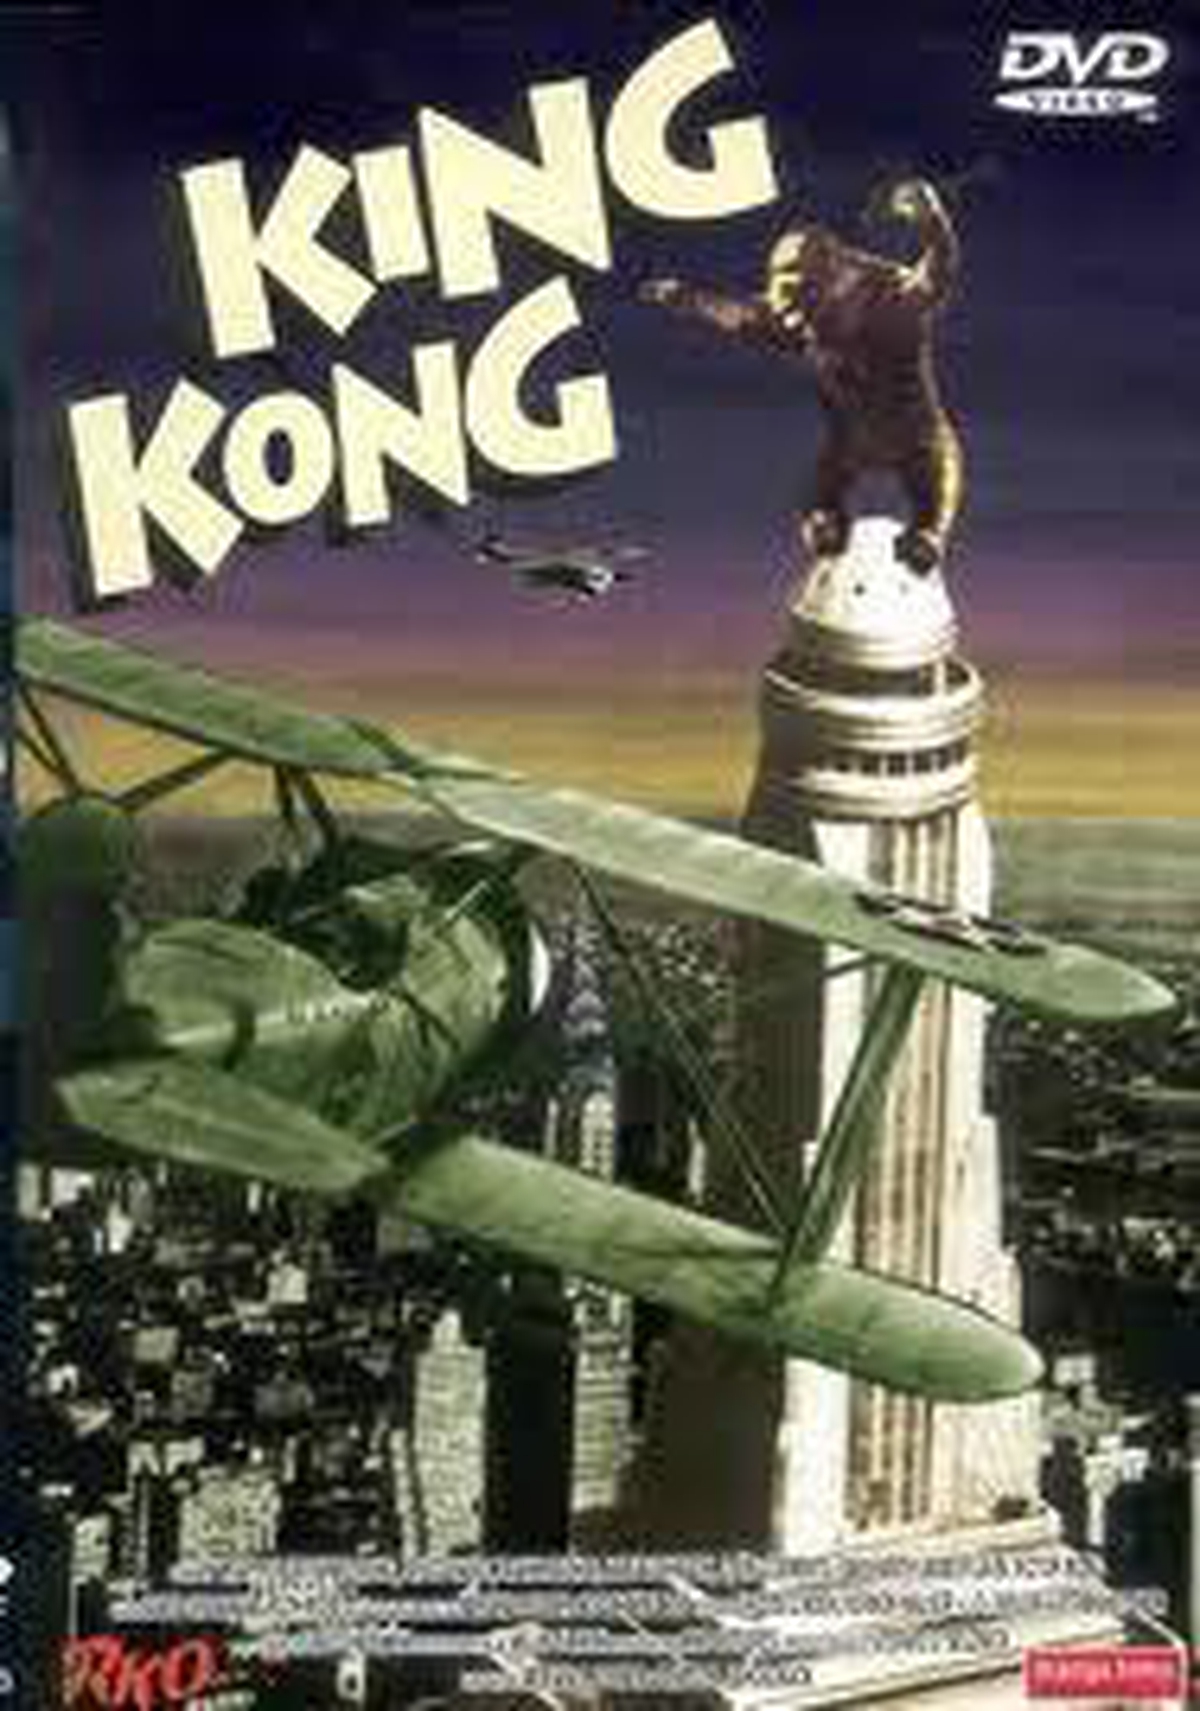 Classic Movie - King Kong | Arena - RTÉ Radio 1